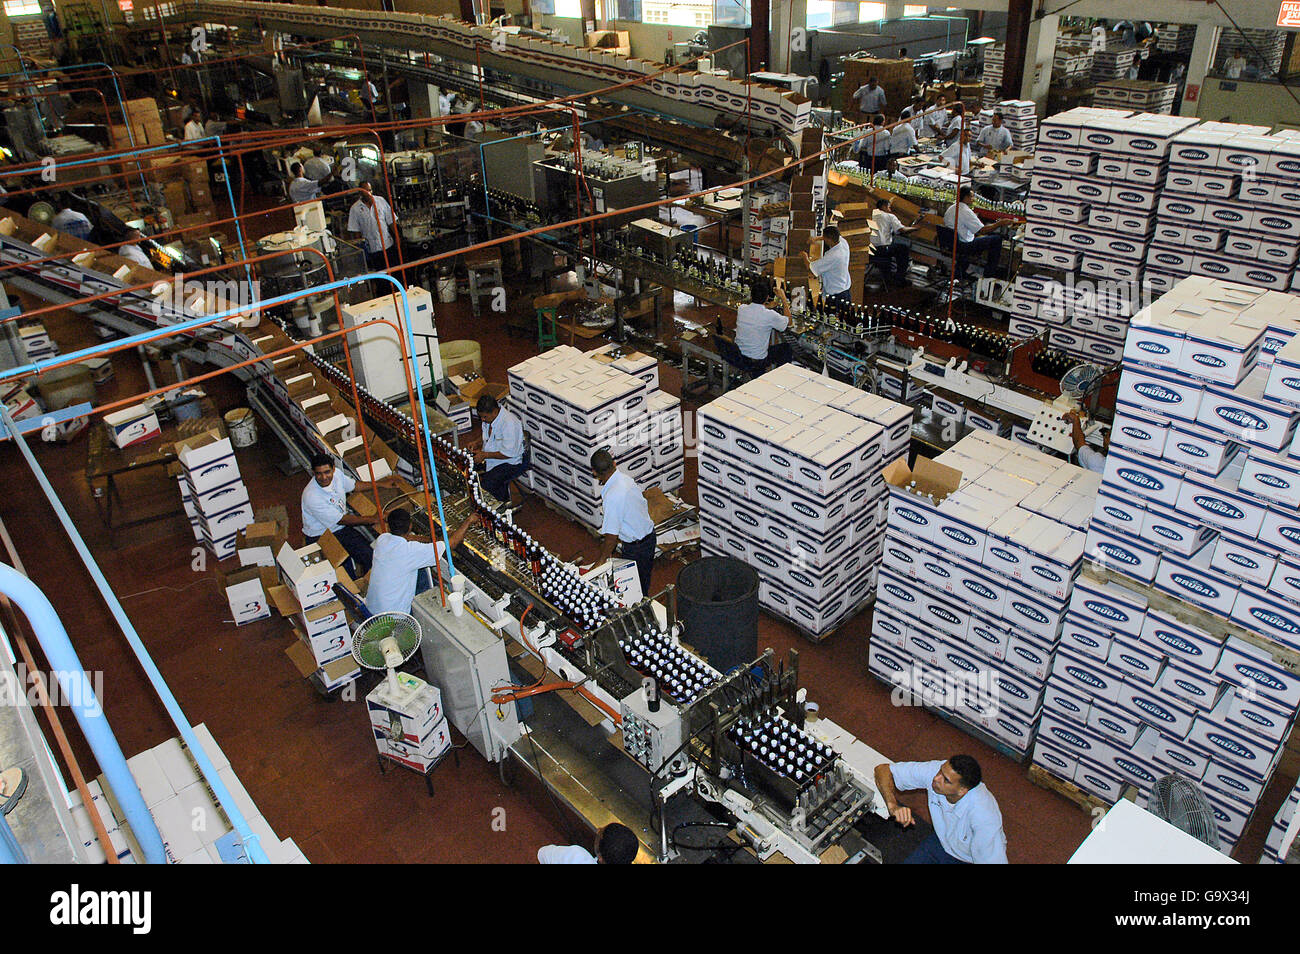 Brugal rum factory, packing station, Puerto Plata, Dominican Republic, Island of Hispaniola, Caribbean Stock Photo